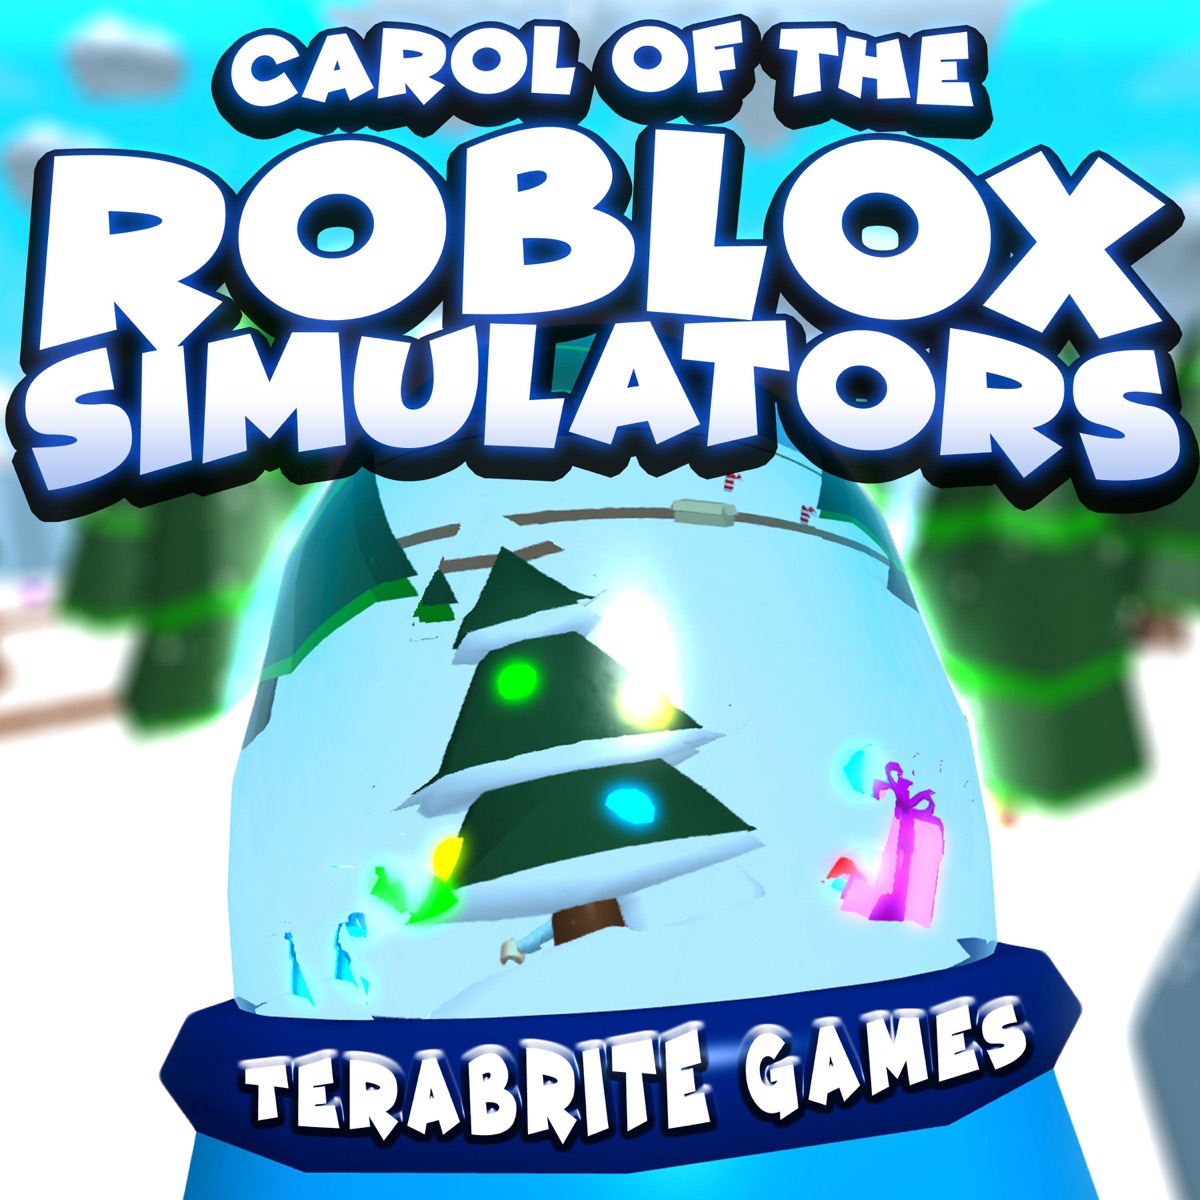 Carol Of The Roblox Simulators Terabrite Games Lyrics Ratings And Reviews - roblox egyptian music